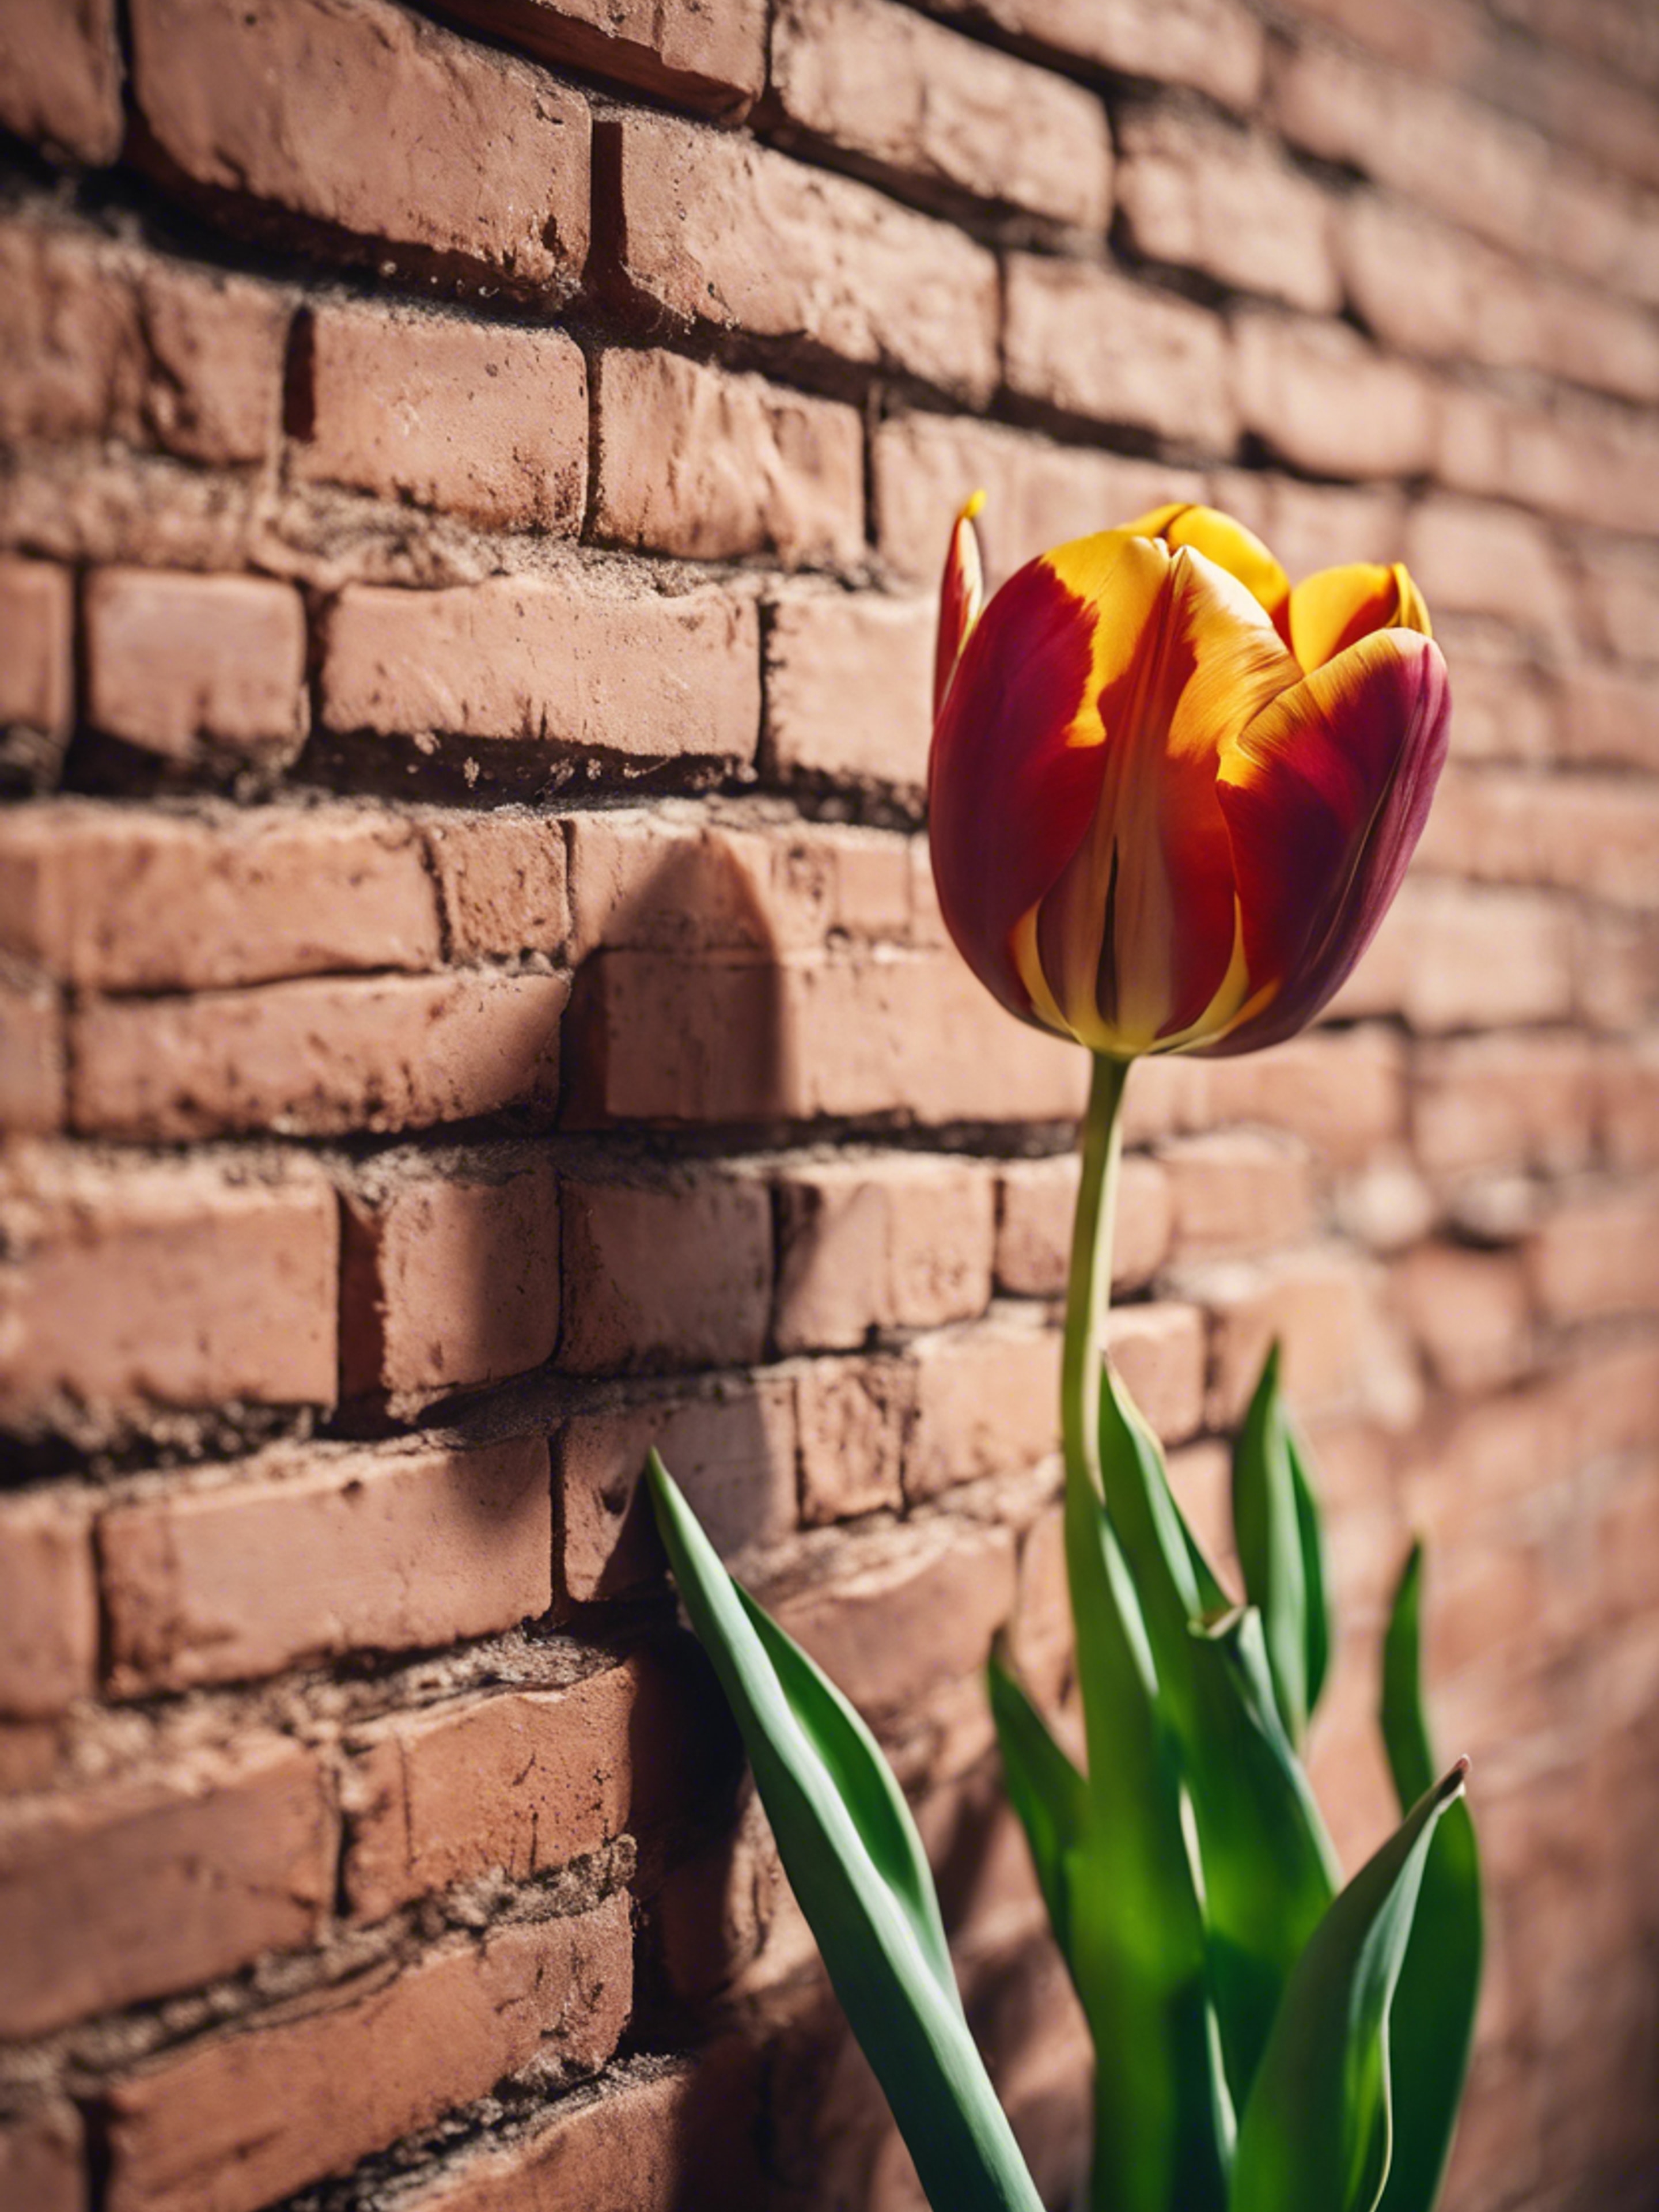 The shadow of a tulip on a brick wall.壁紙[ef4f857ec7964de195c3]